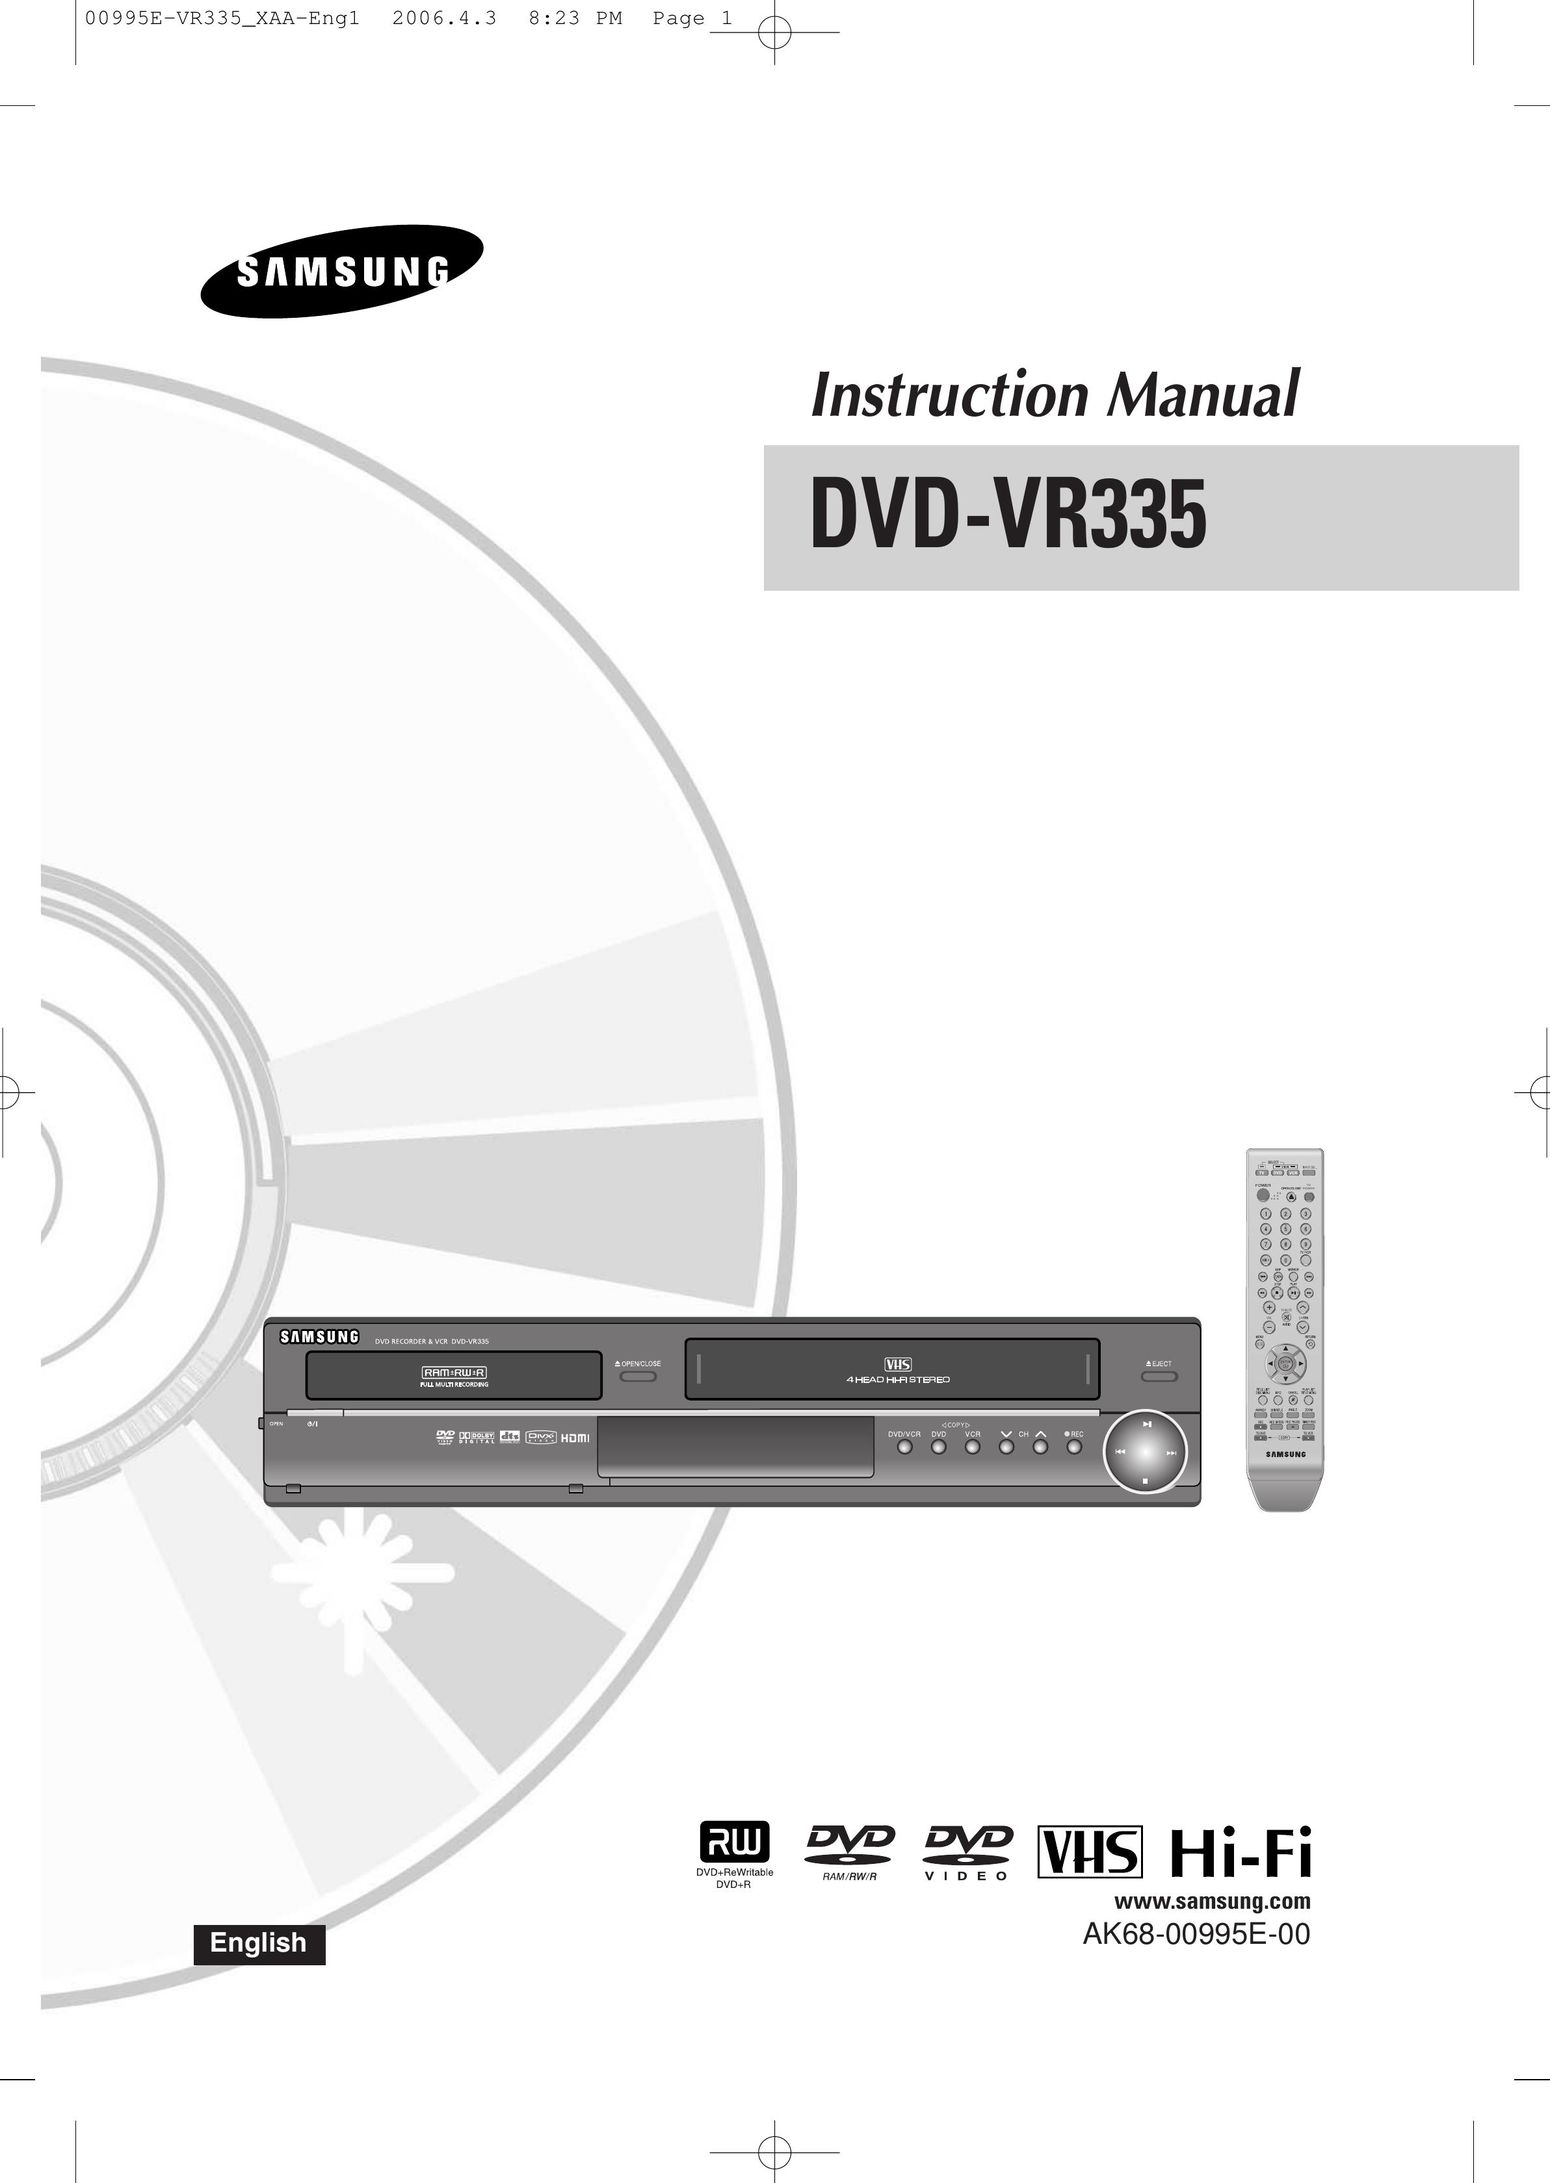 Samsung DVD-VR335 MP3 Player User Manual